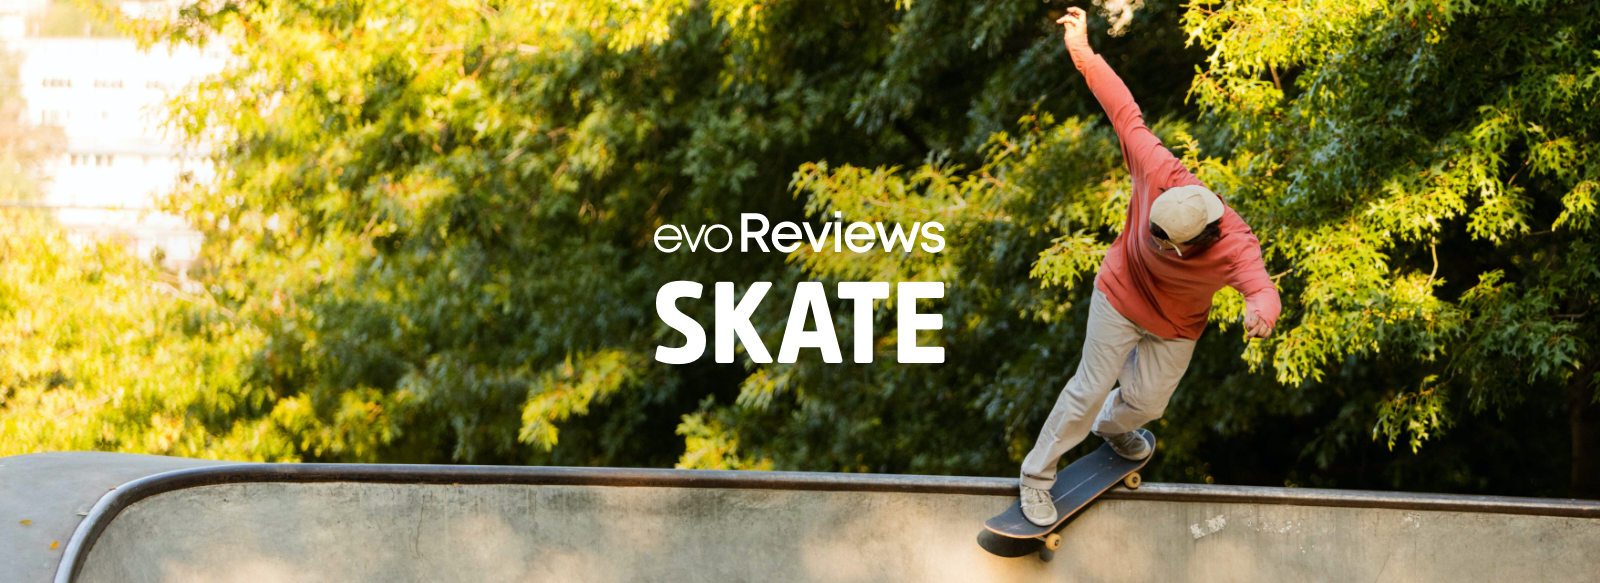 evoReviews Skate